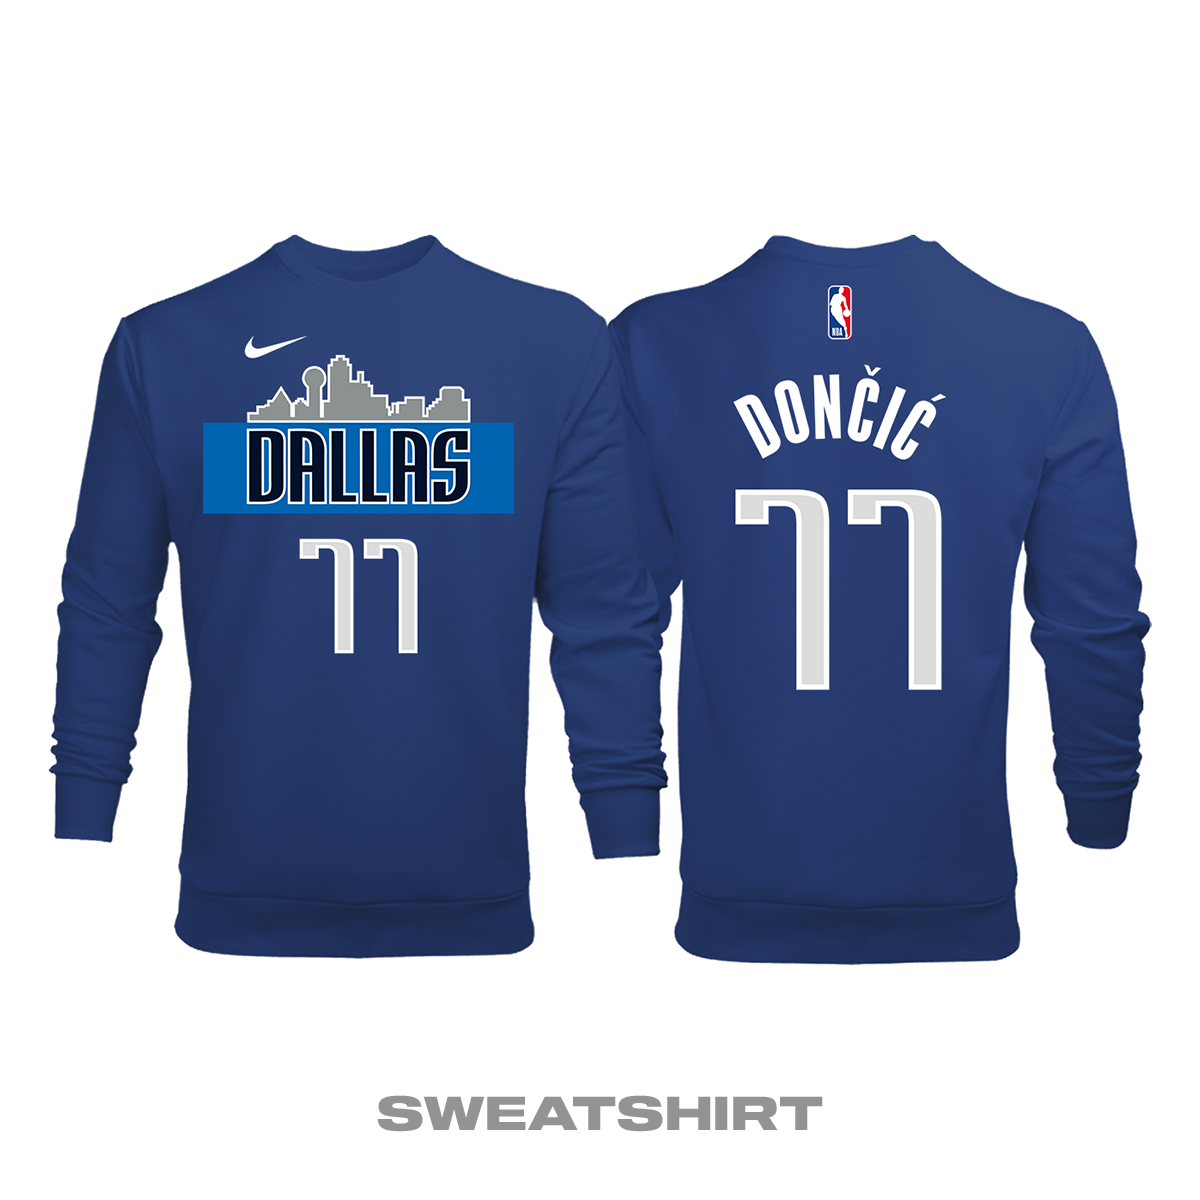 Dallas Mavericks: Statement Edition 2017/2018 Sweatshirt